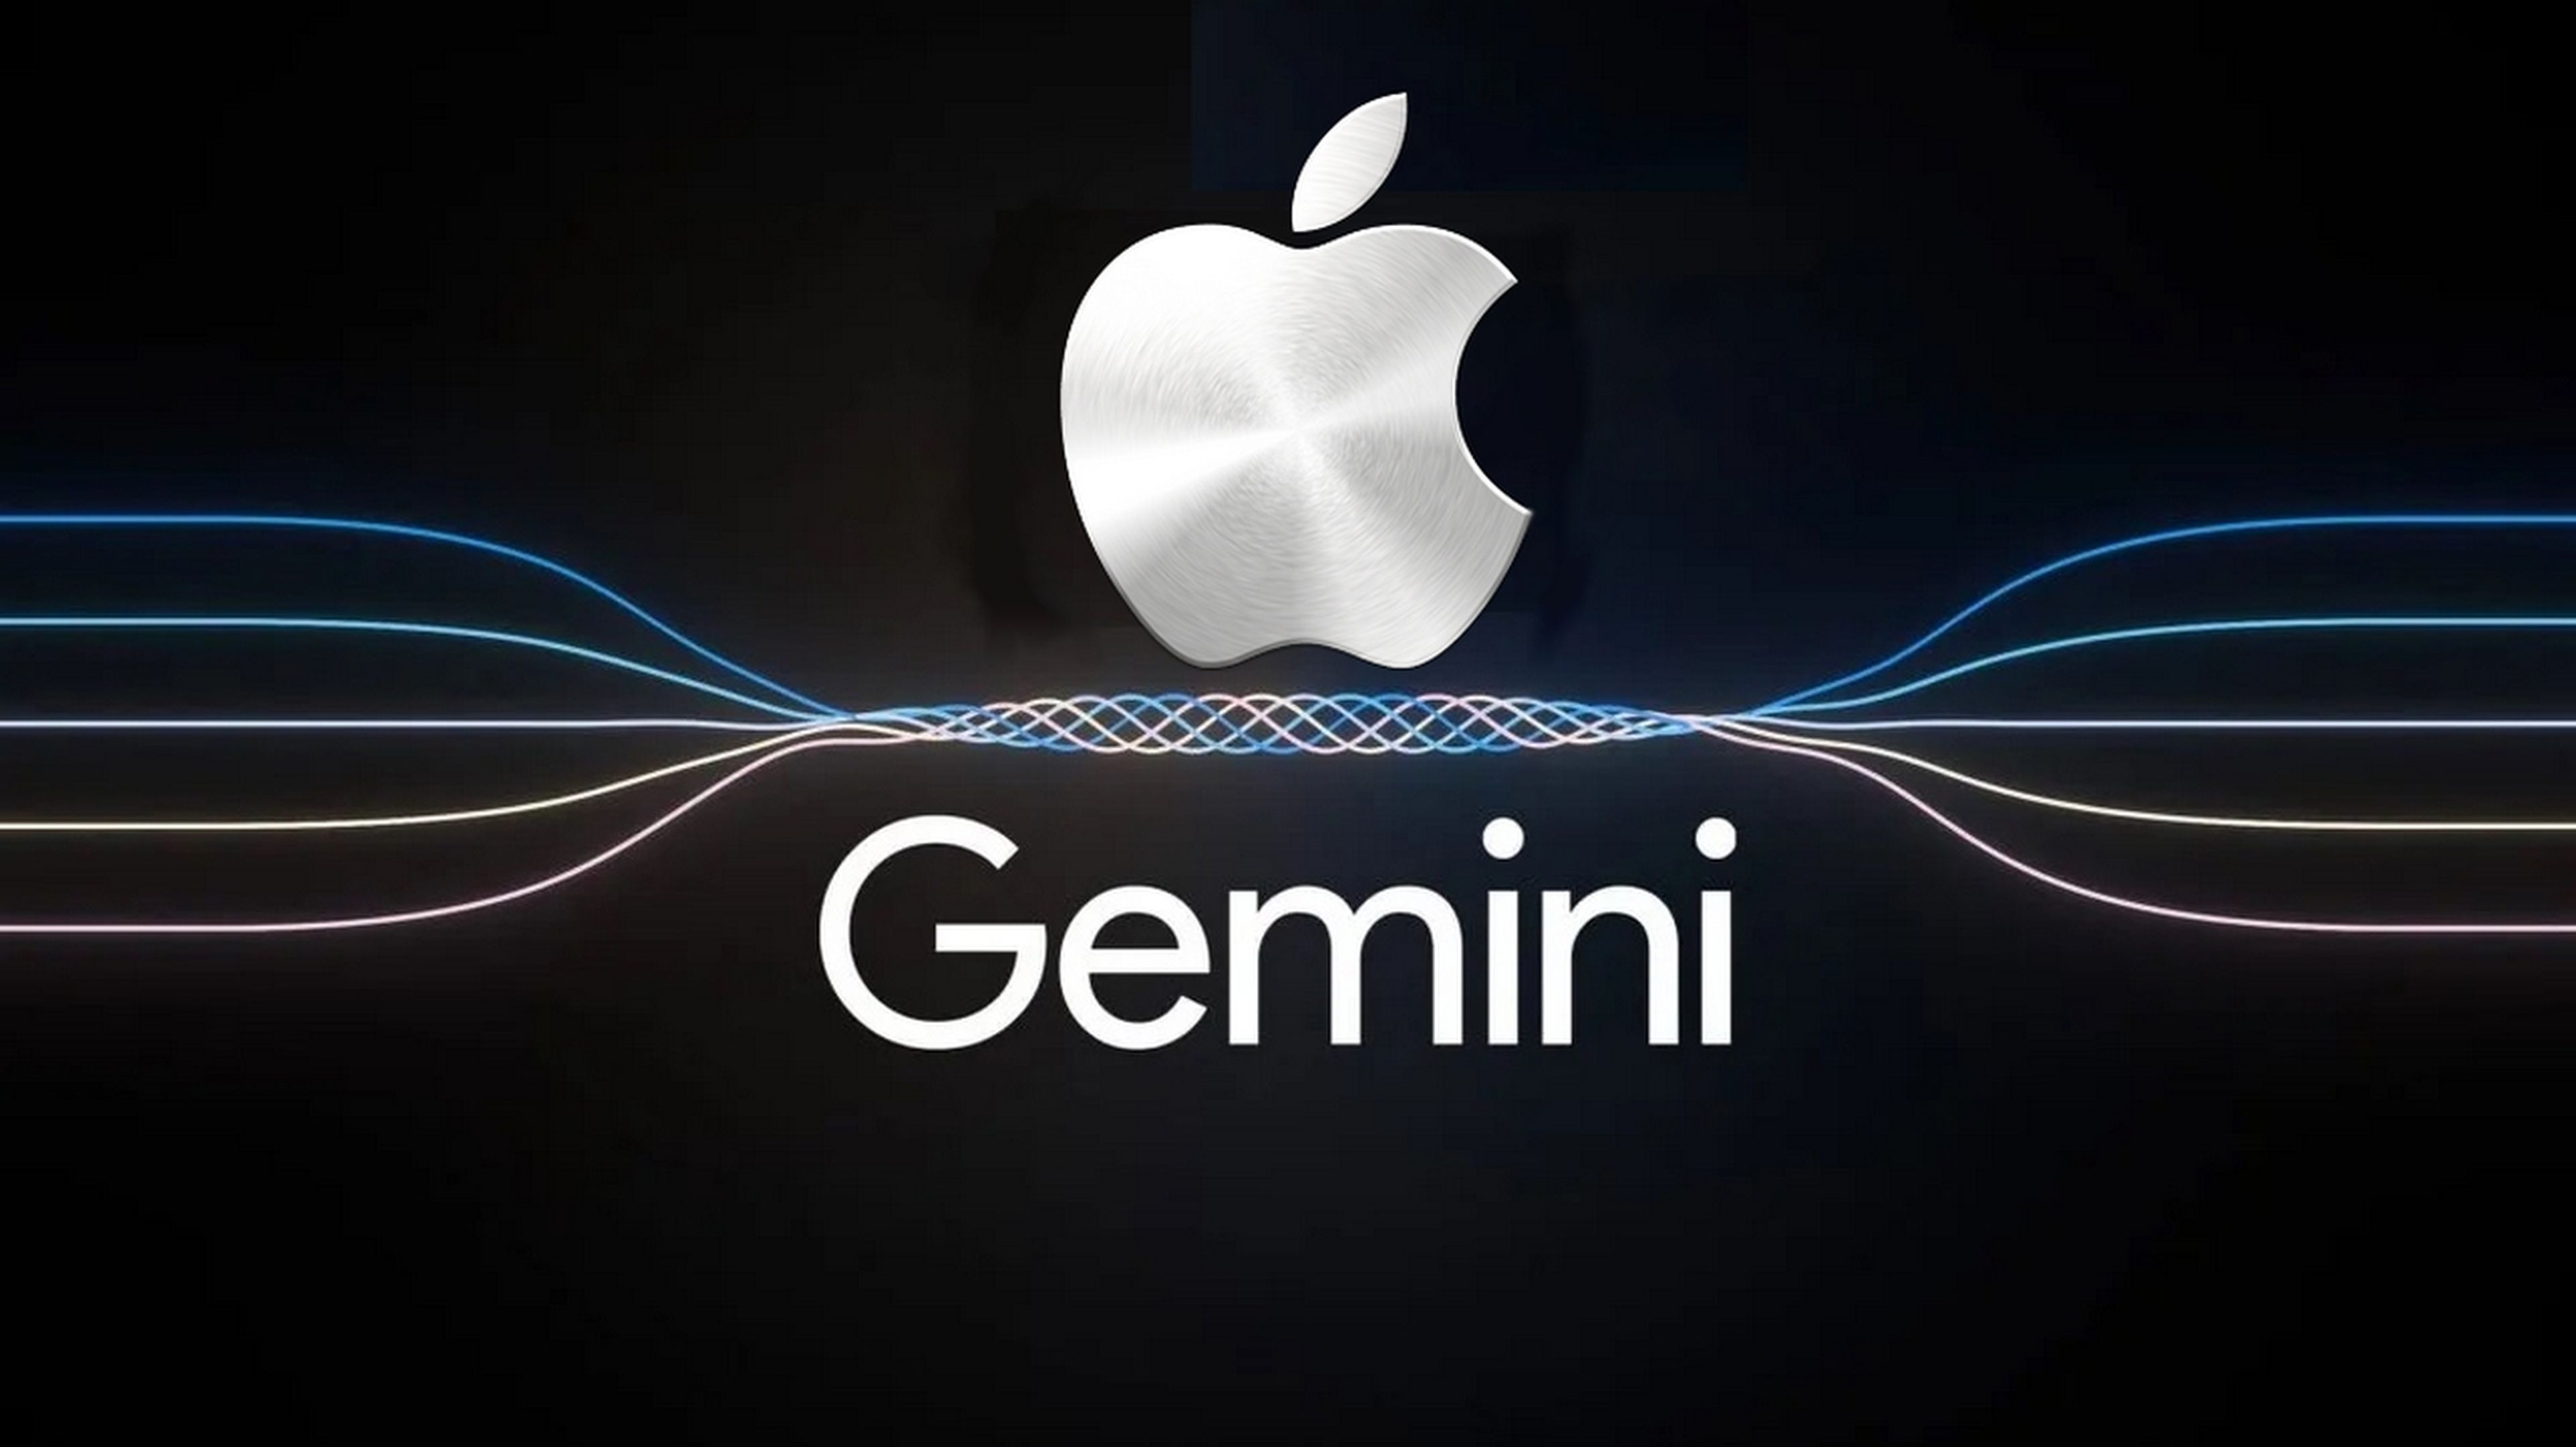 Tim Cook y Sundar Pichai negocian la llegada de la IA Gemini al iPhone